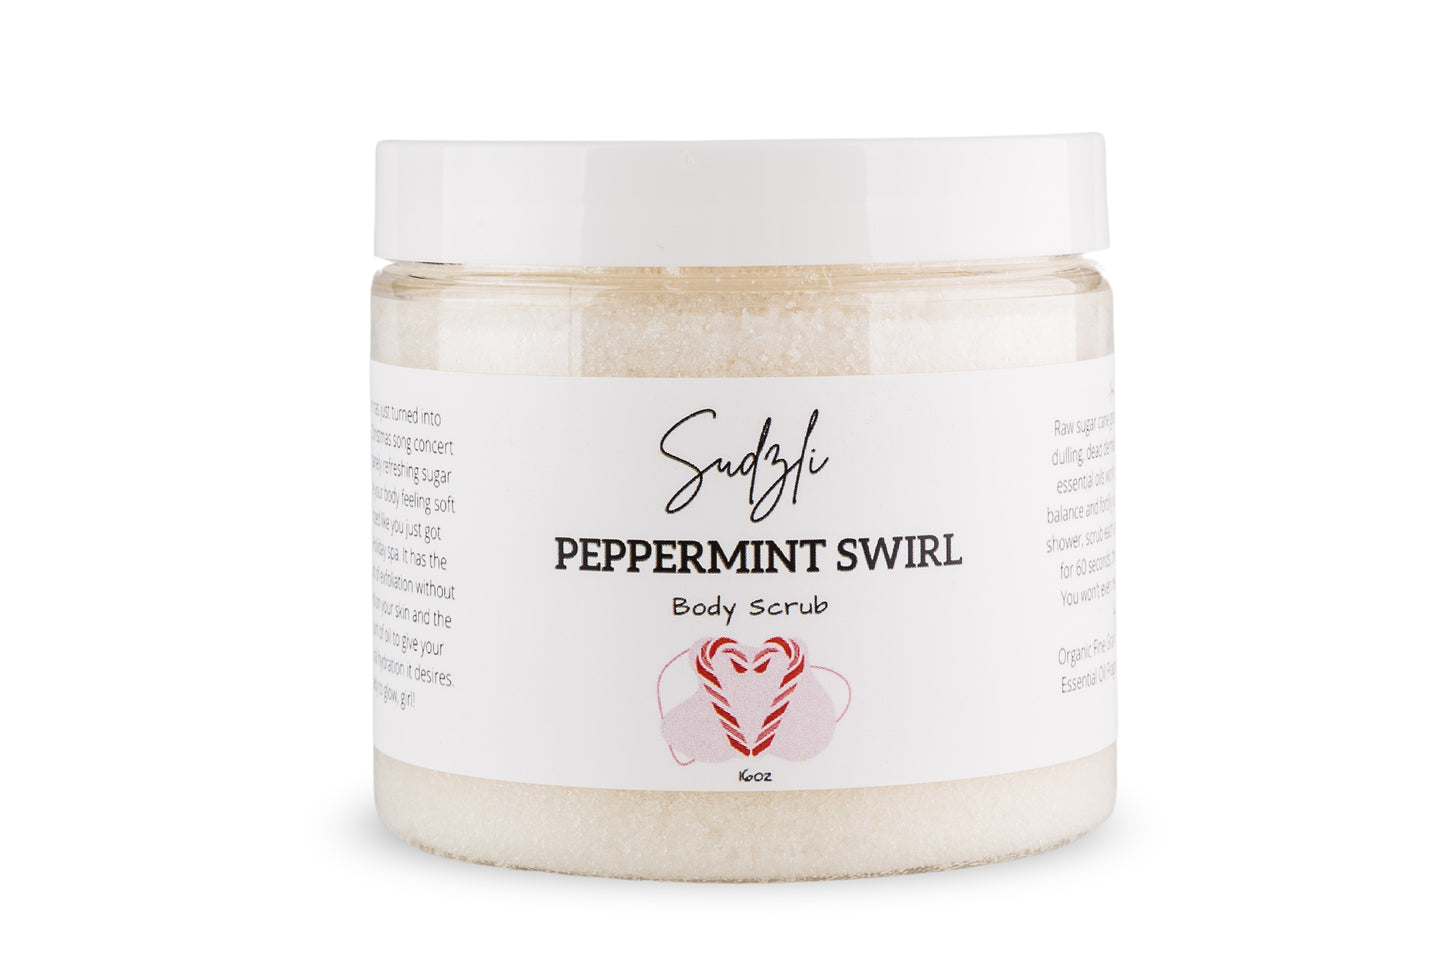 Peppermint Swirl Body Scrub